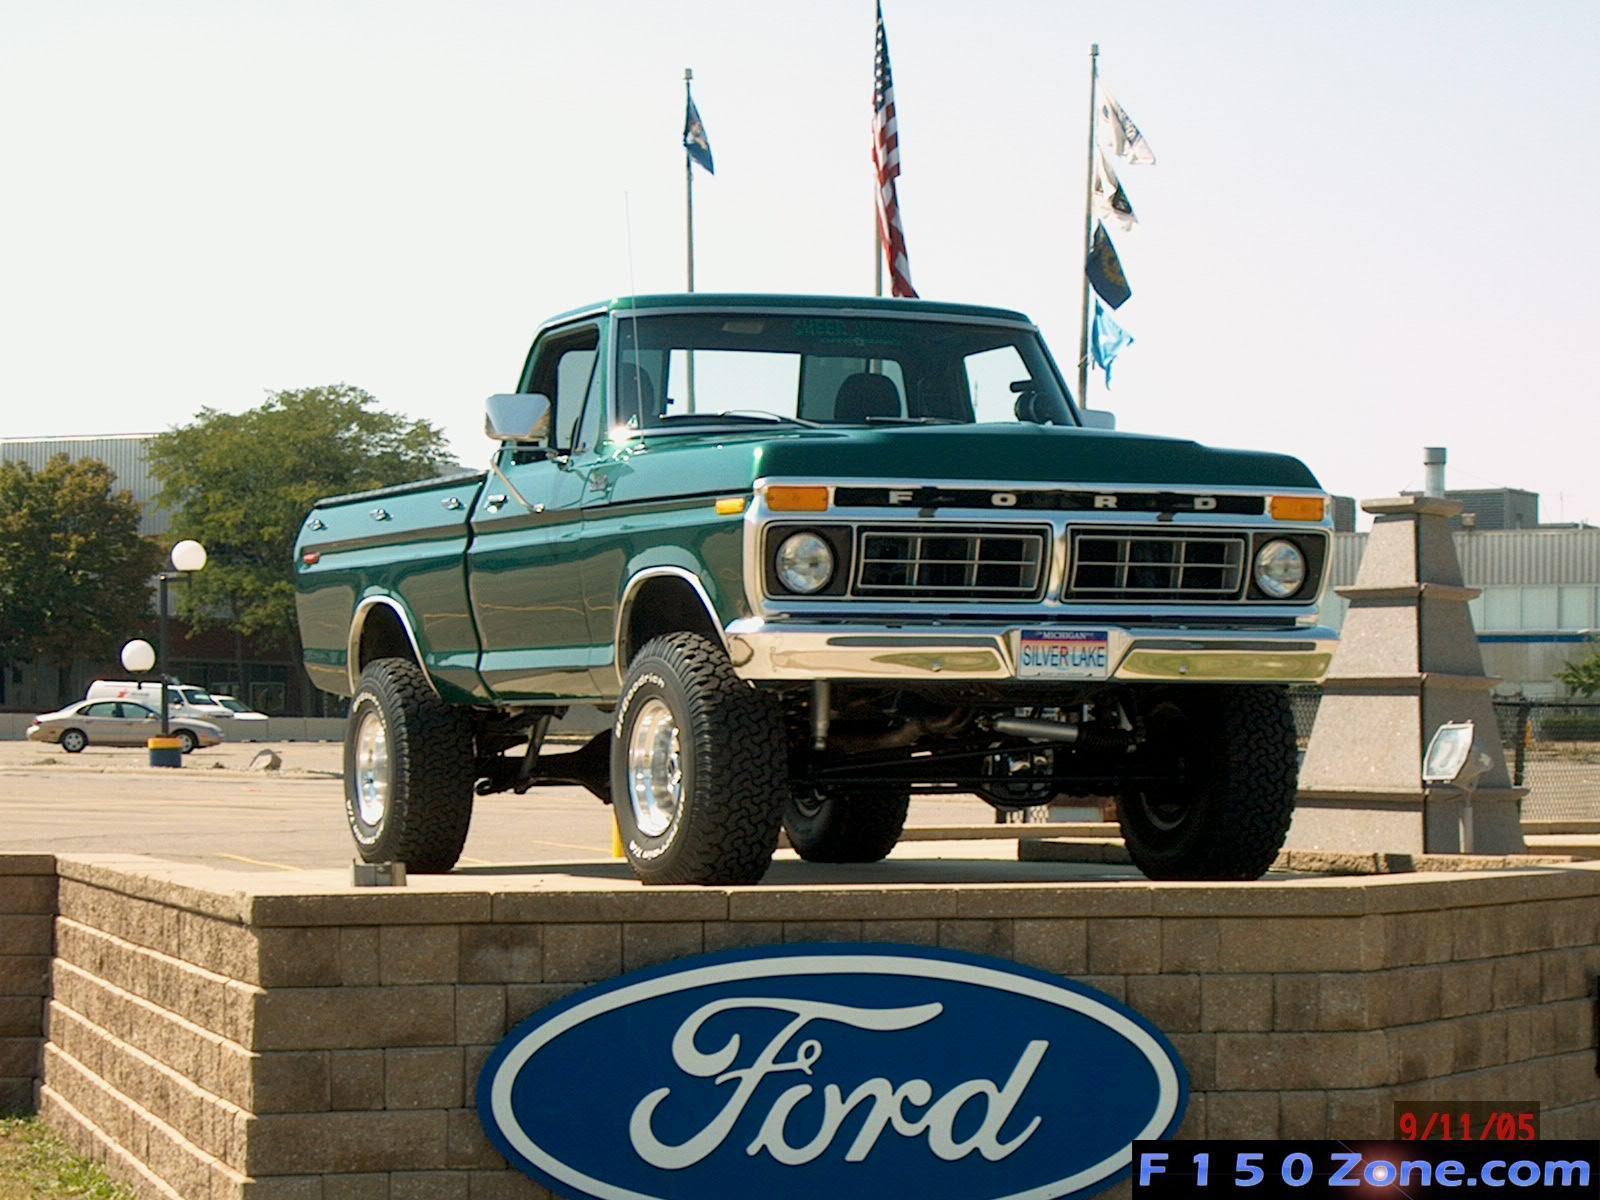 Sitting tall on the Ford truck display ramp at Michigan truc